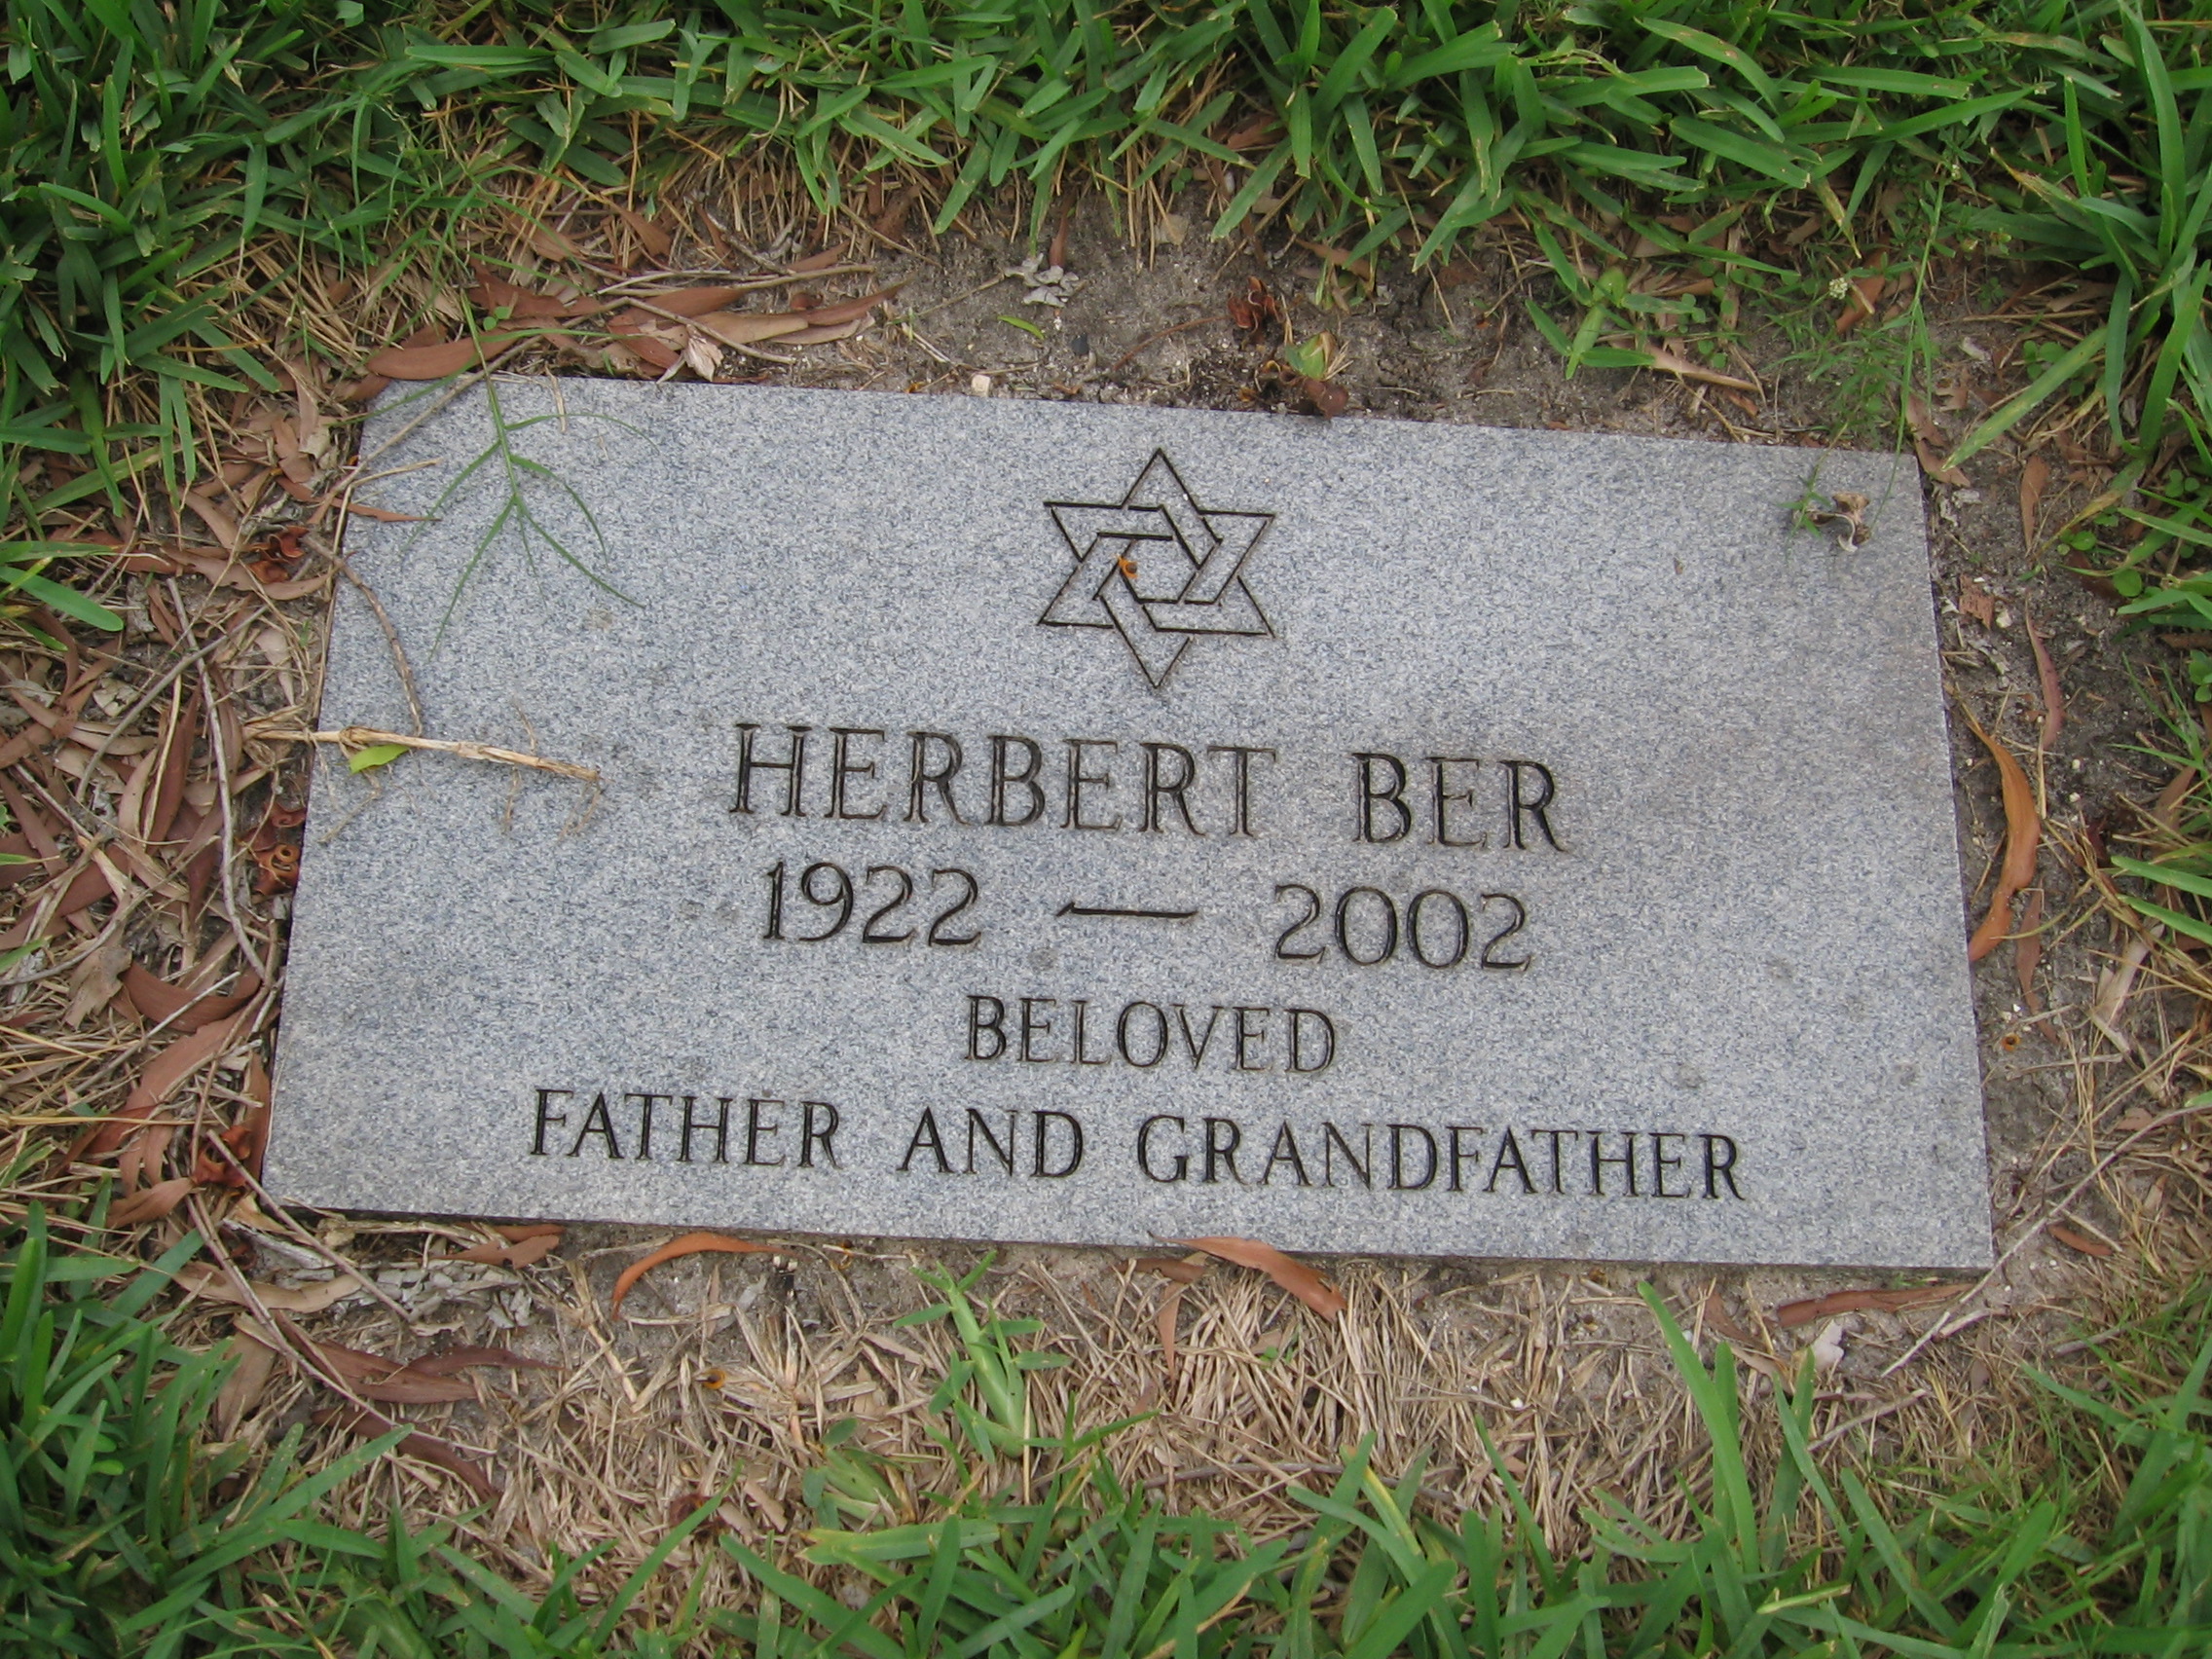 Herbert Ber